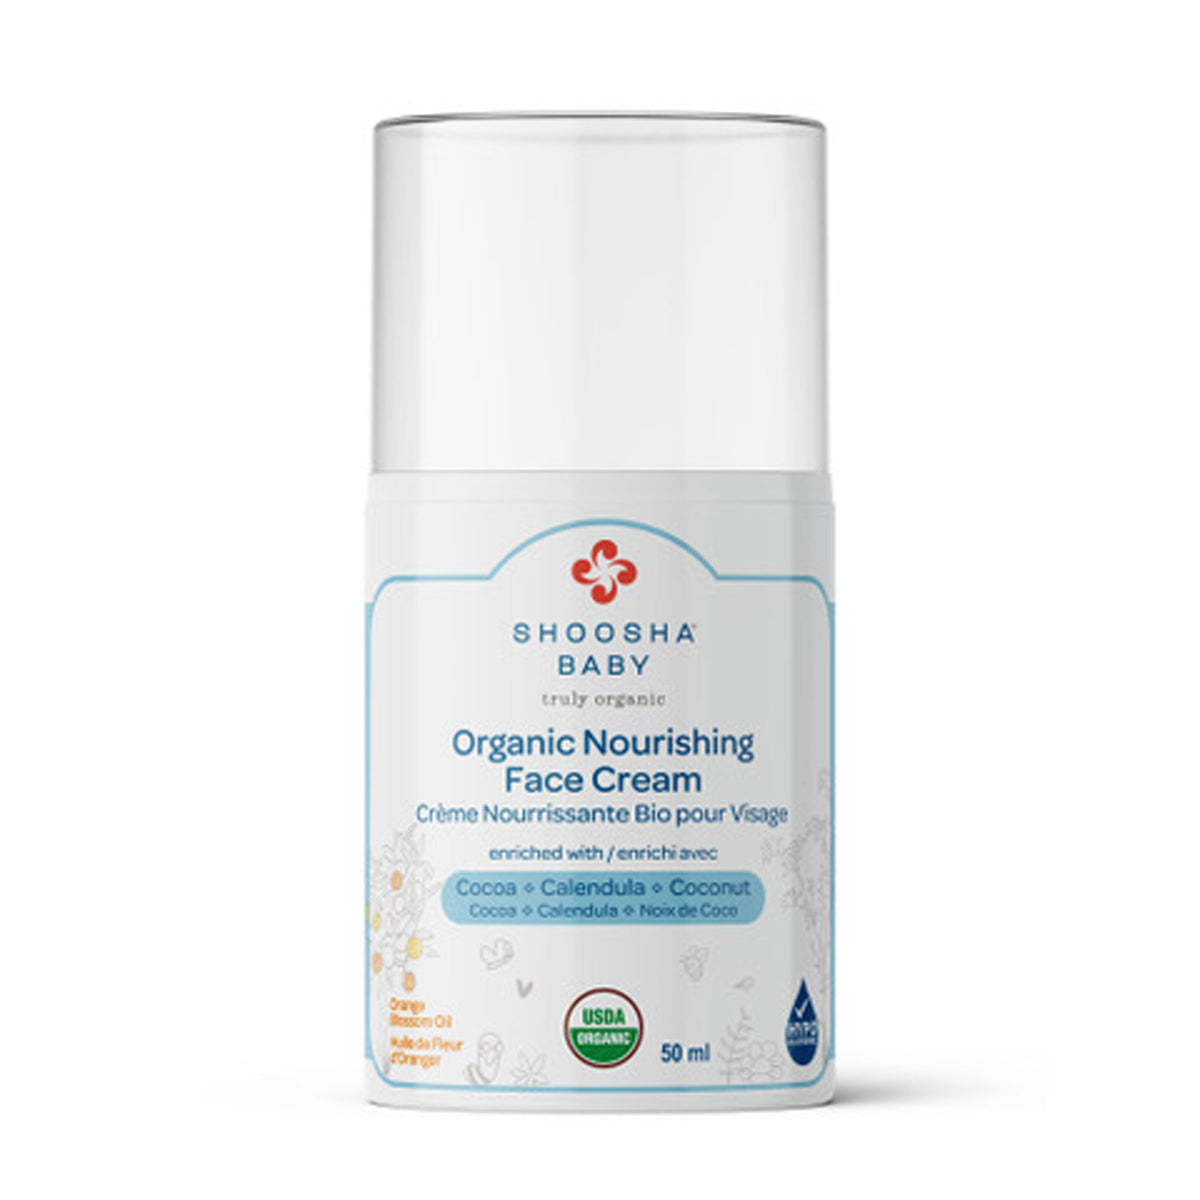 Organic Nourishing Face Cream